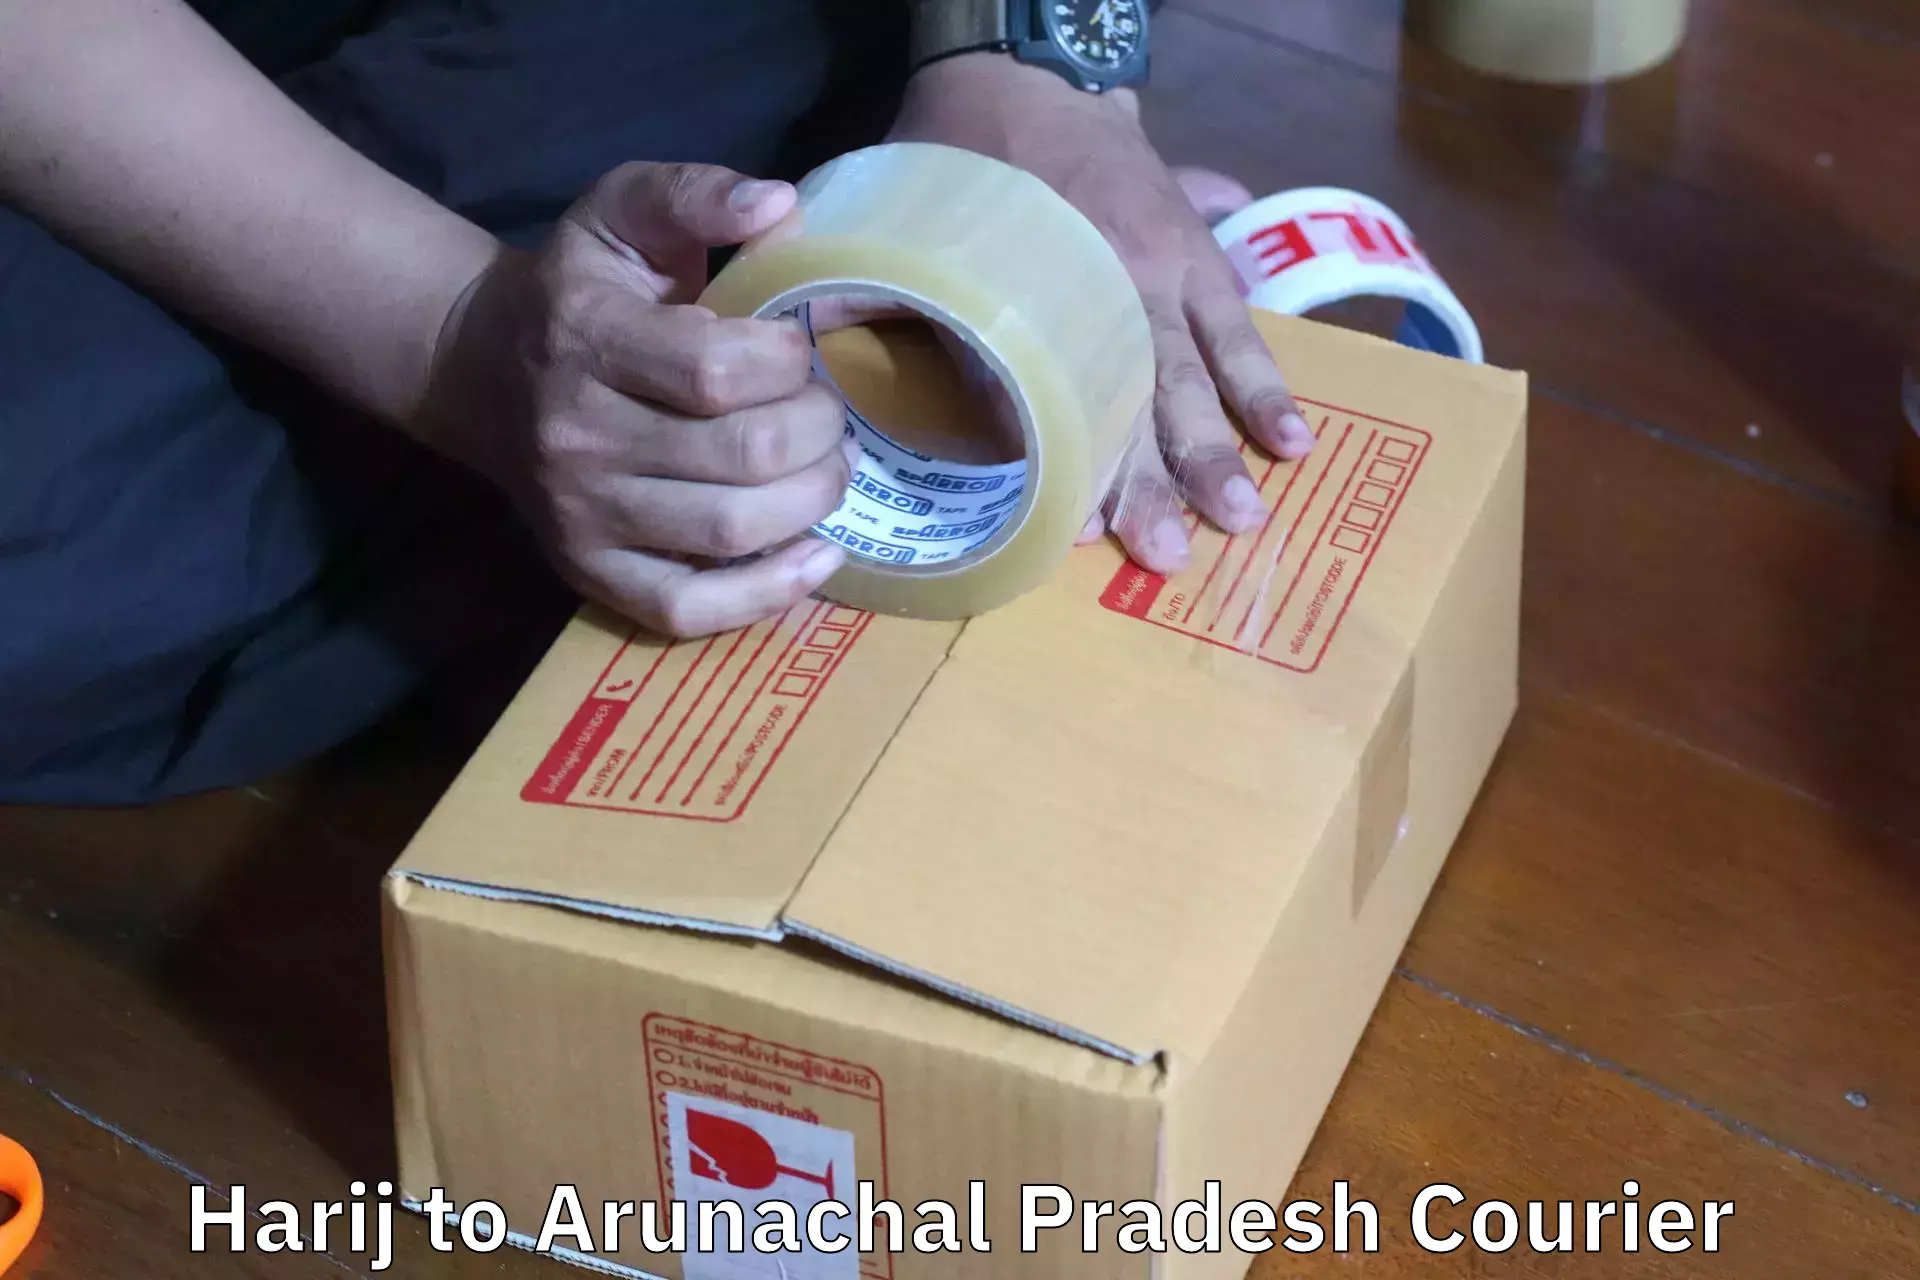 Home relocation experts Harij to Arunachal Pradesh